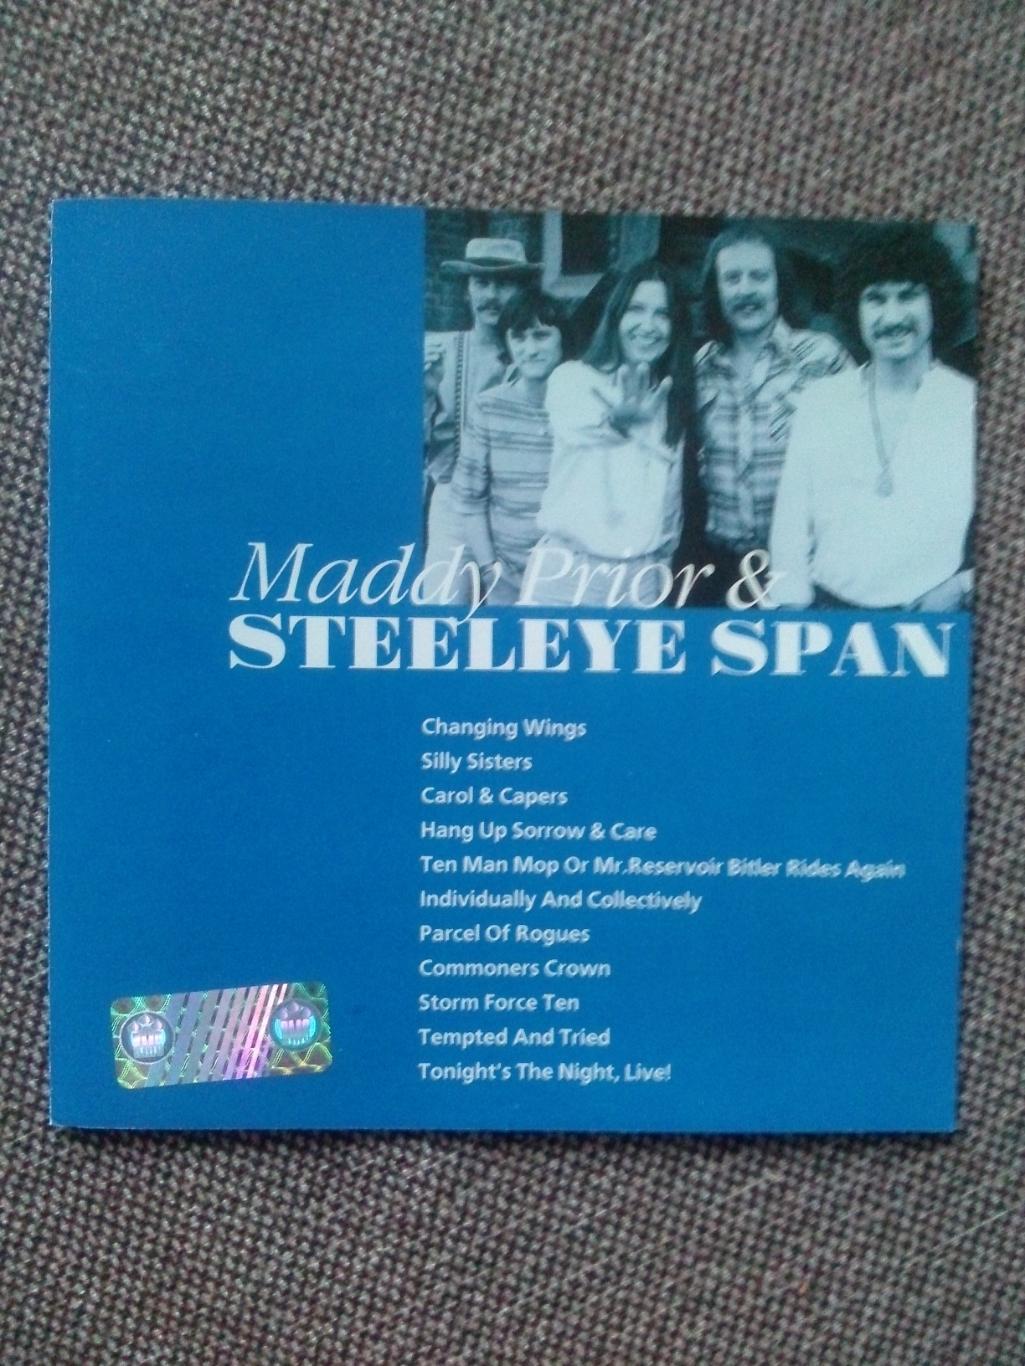 MP - 3 CD диск : Maddy Prior & Steeleye Span 1971 - 1994 гг. 11 альбомов Рок